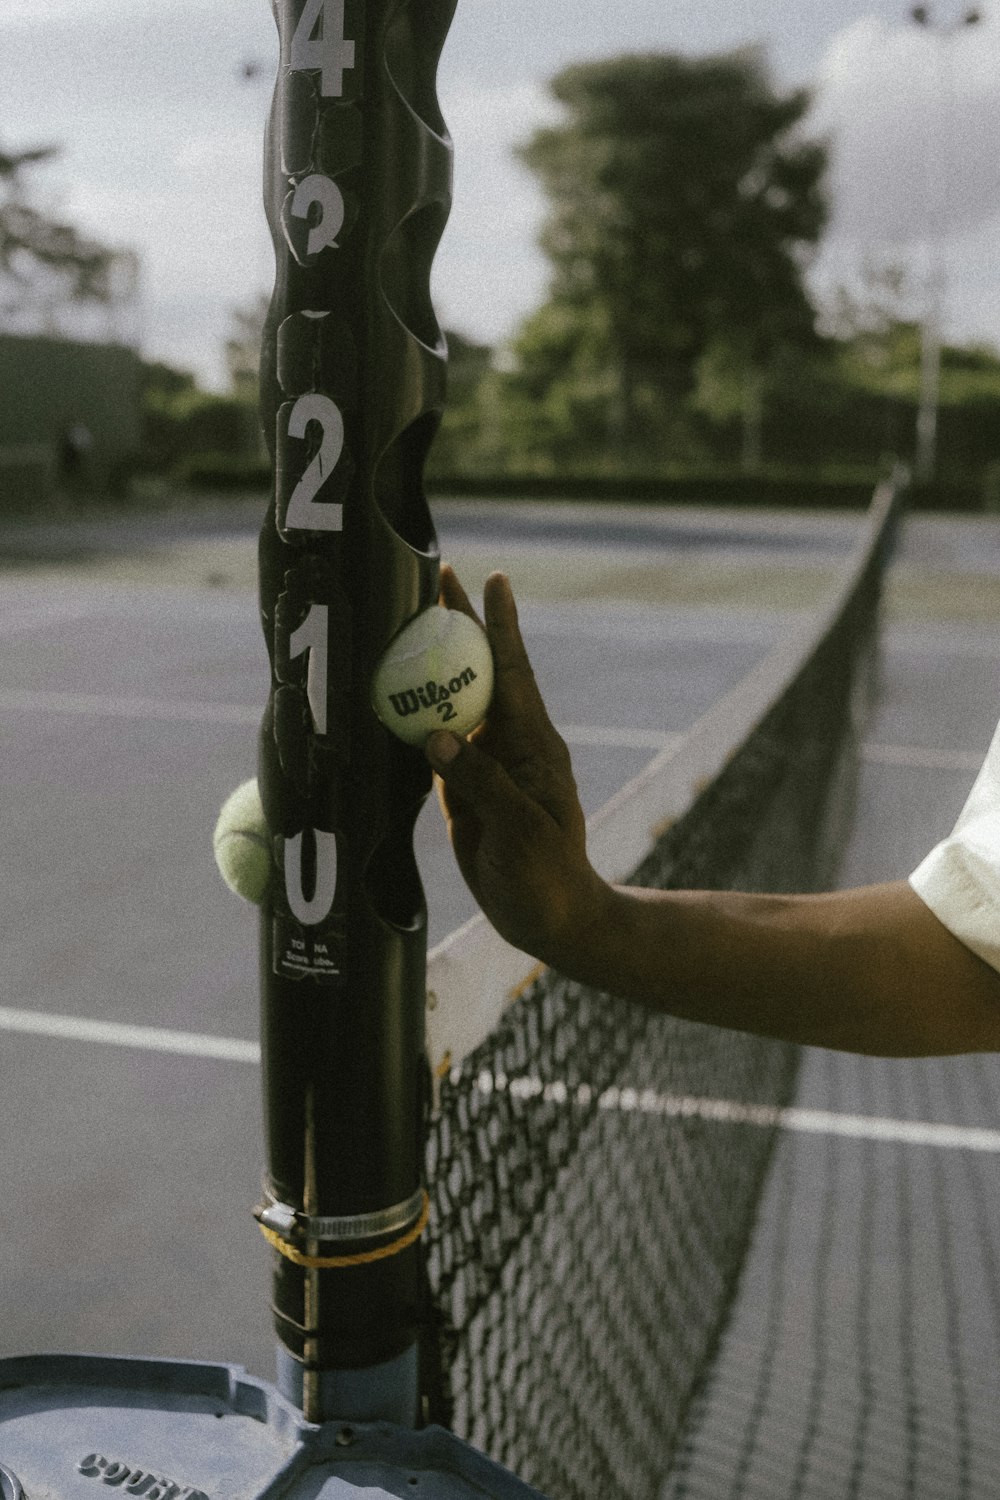 a person holding a tennis ball on a tennis court